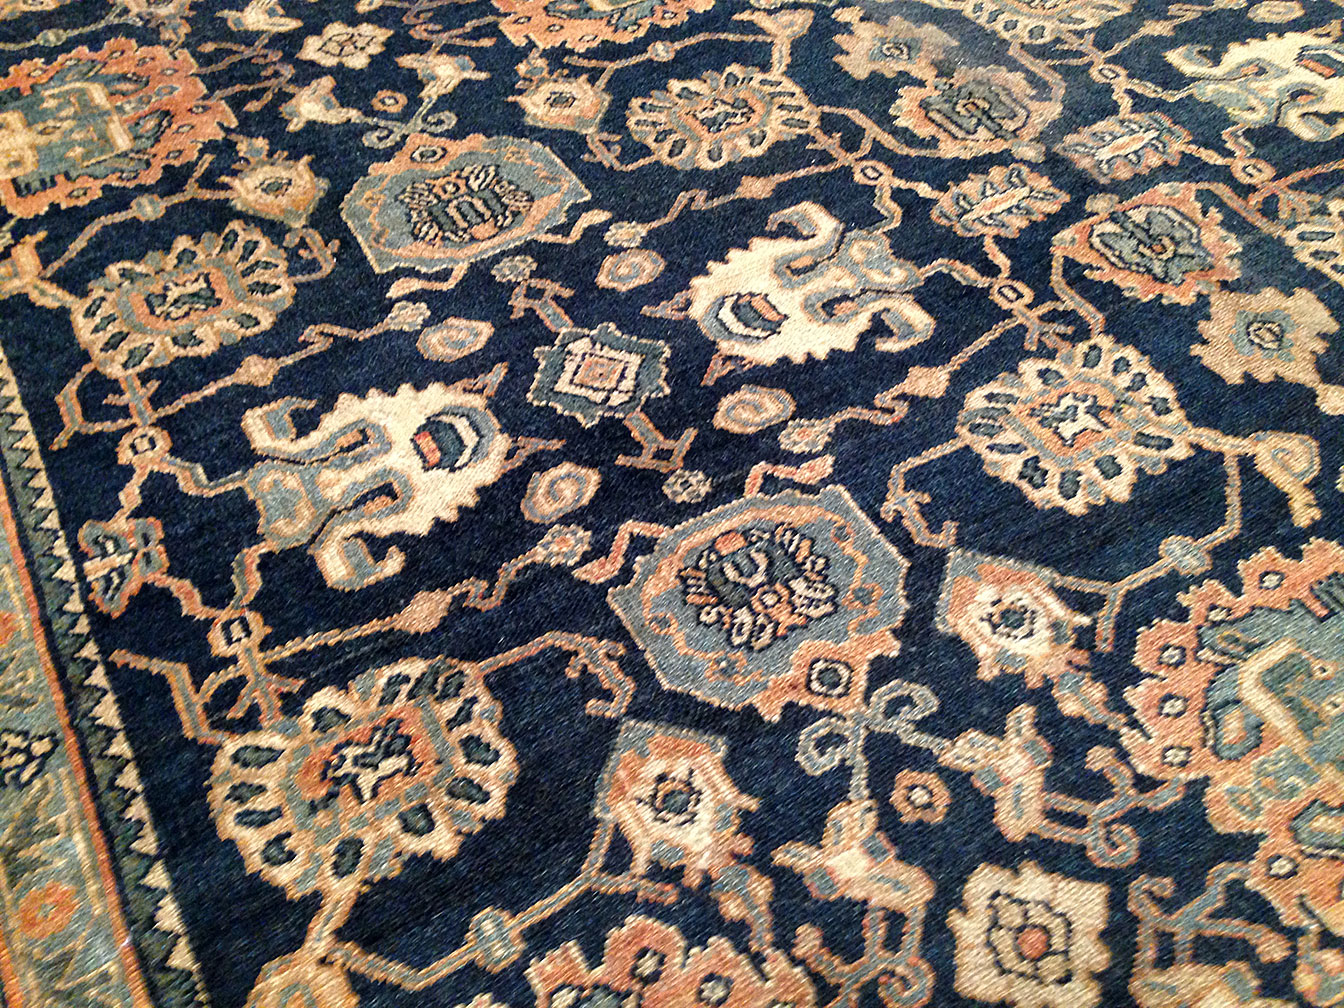 Antique bibi kabad Carpet - # 50686